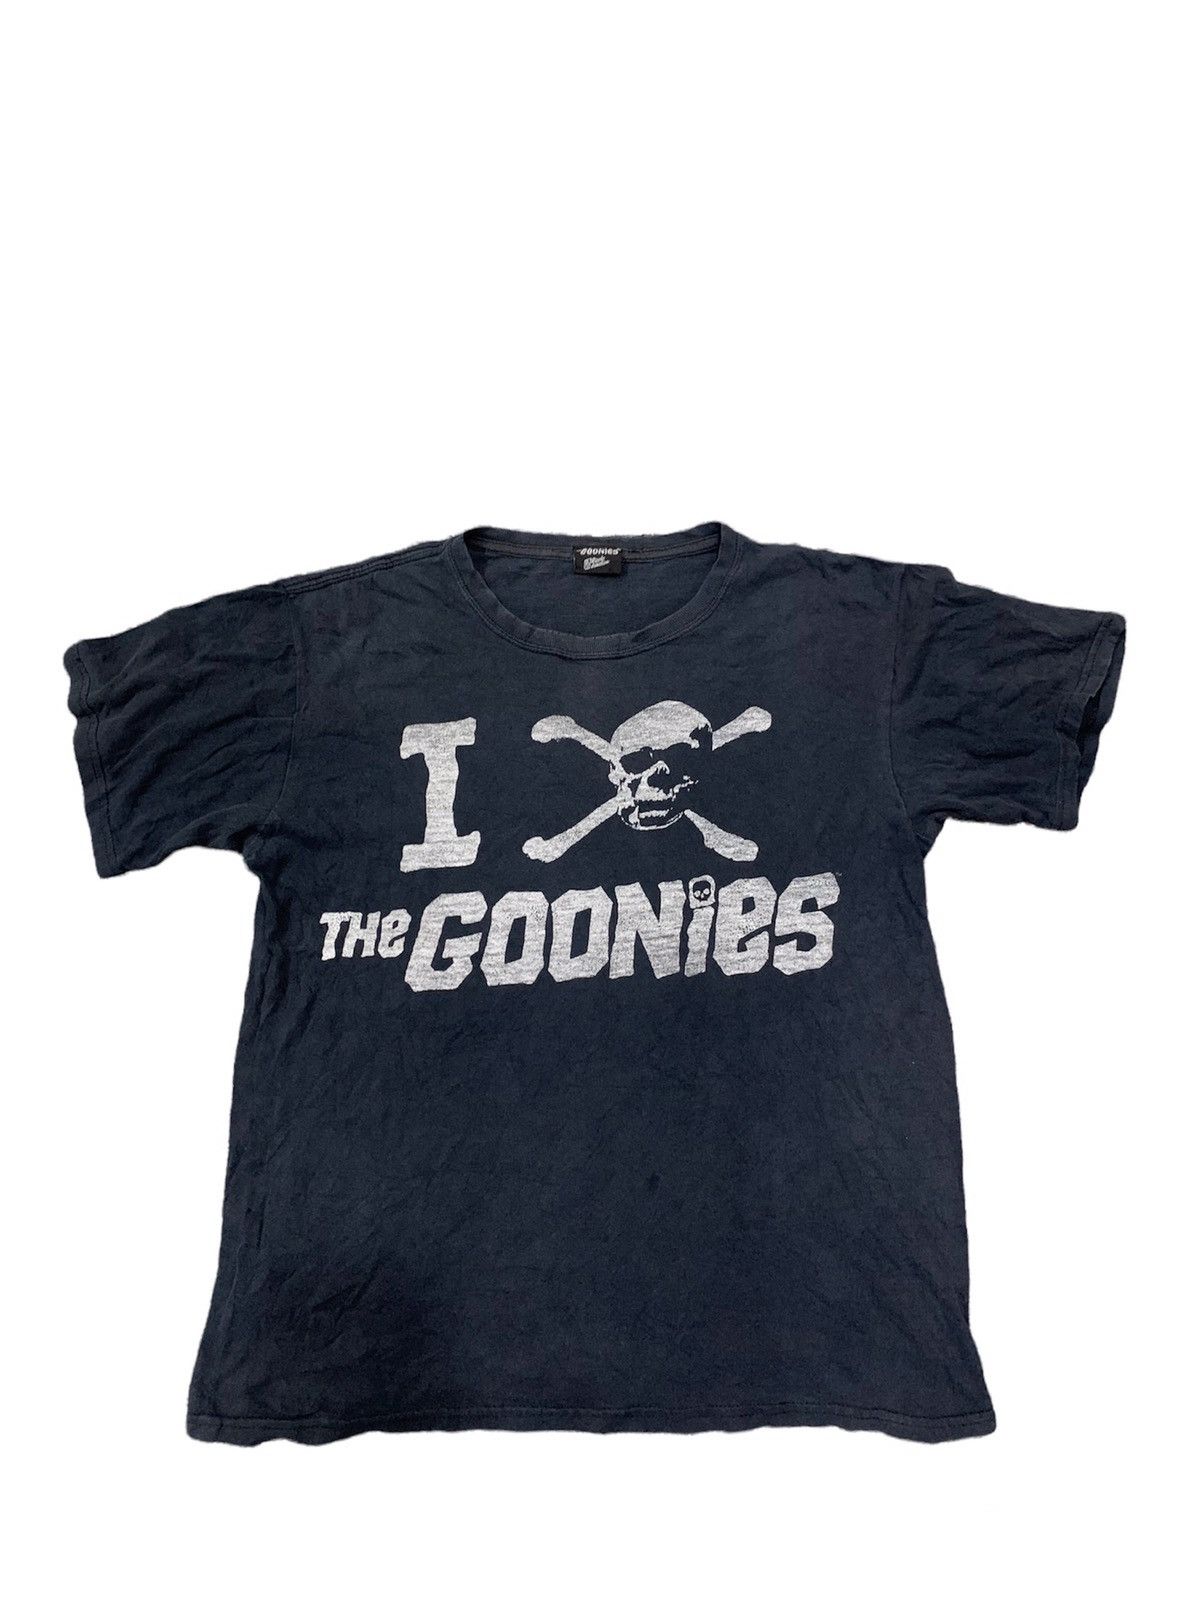 Vintage Vintage The Goonies Movie Tshirt By Ripple Juntion | Grailed